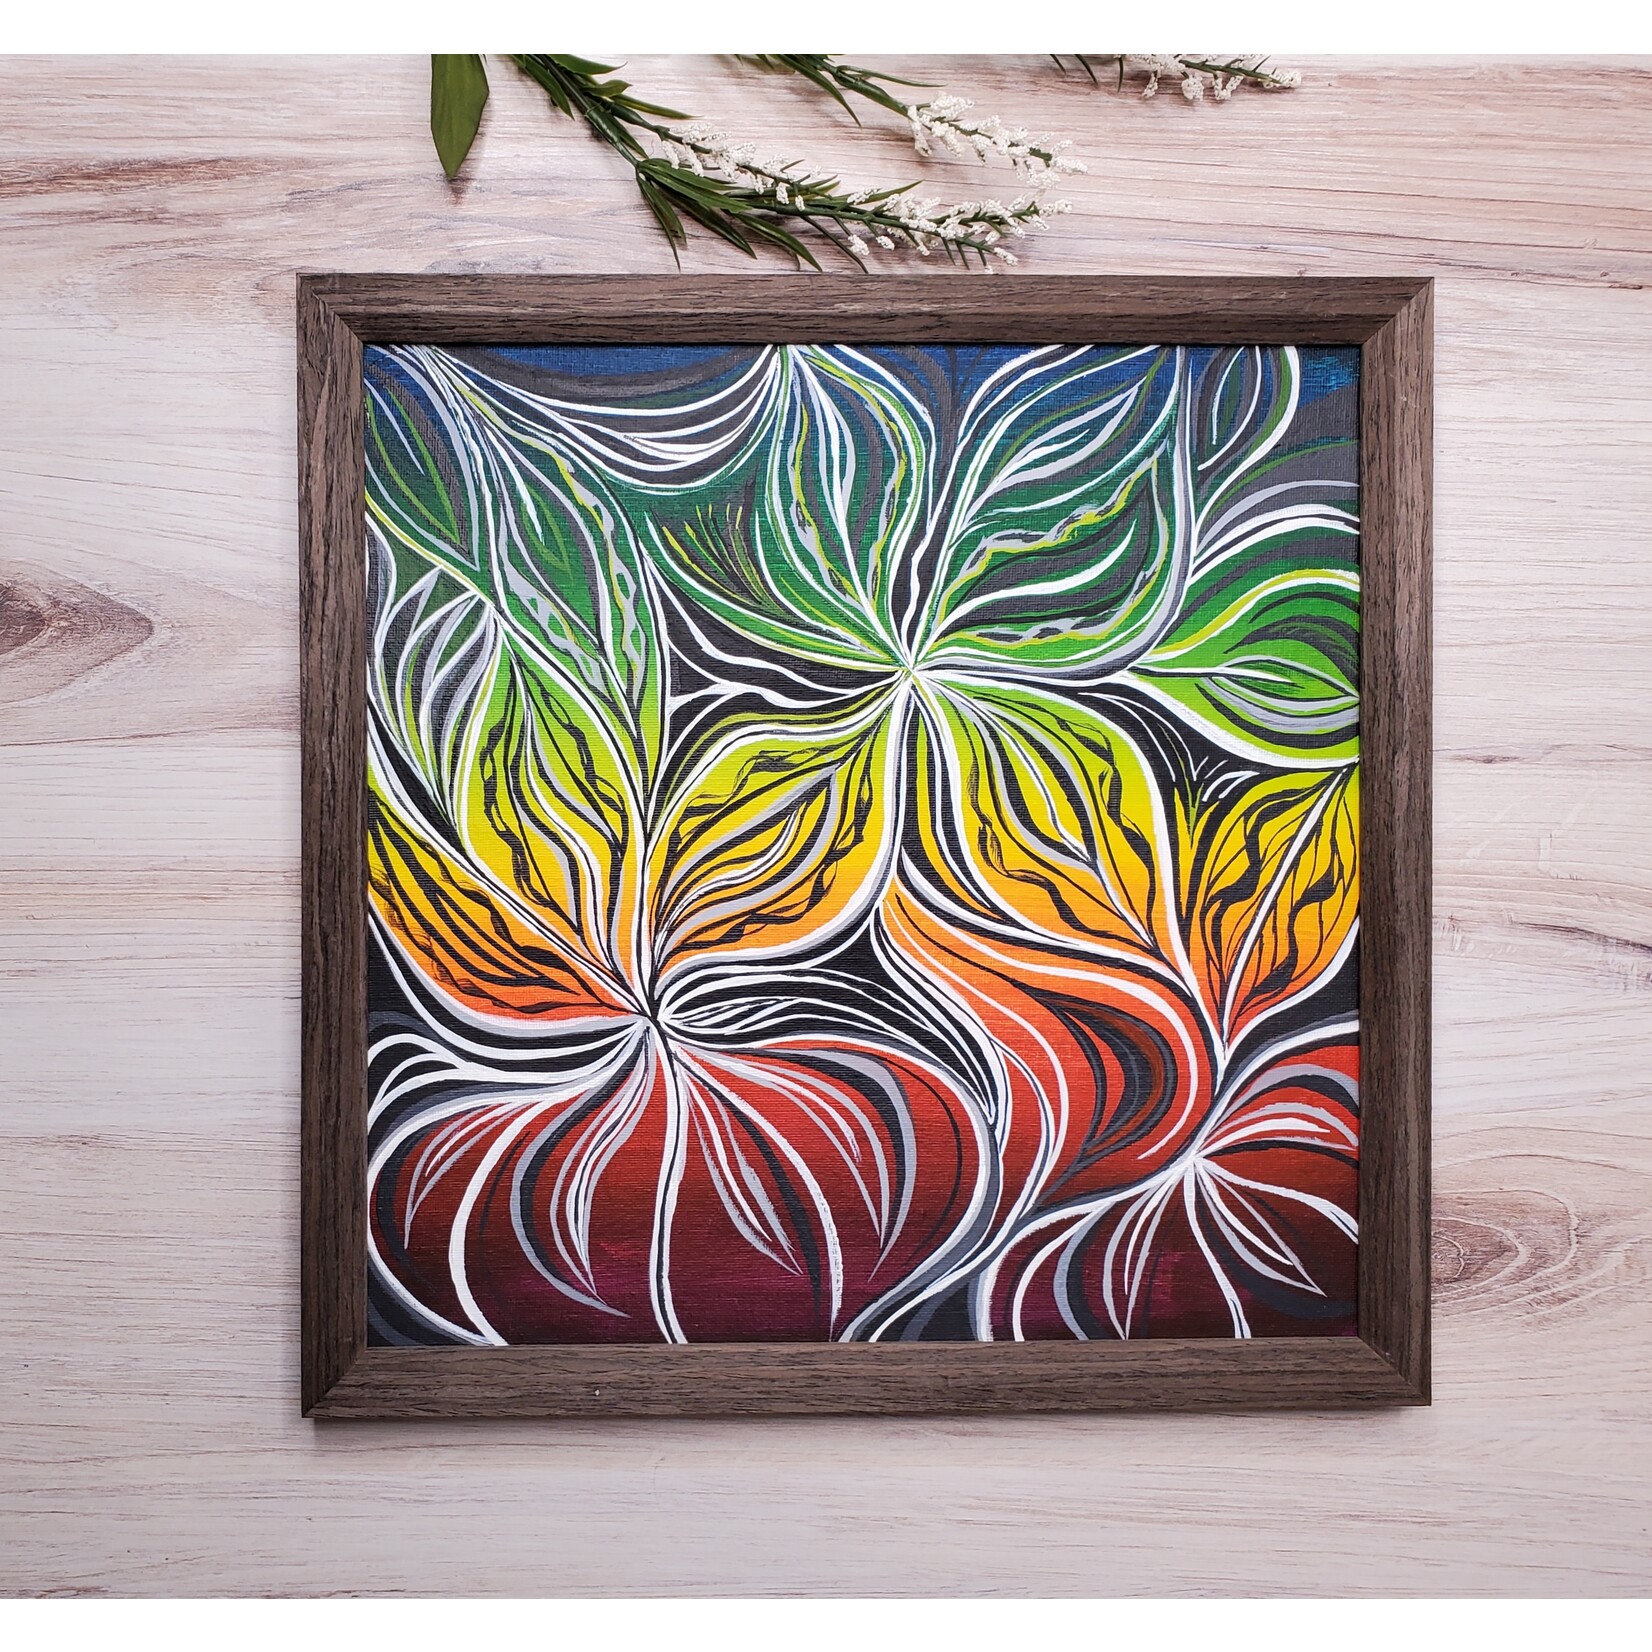 Joy Time Now "Rainbow Beets" - Framed Acrylic Original - 12x12"